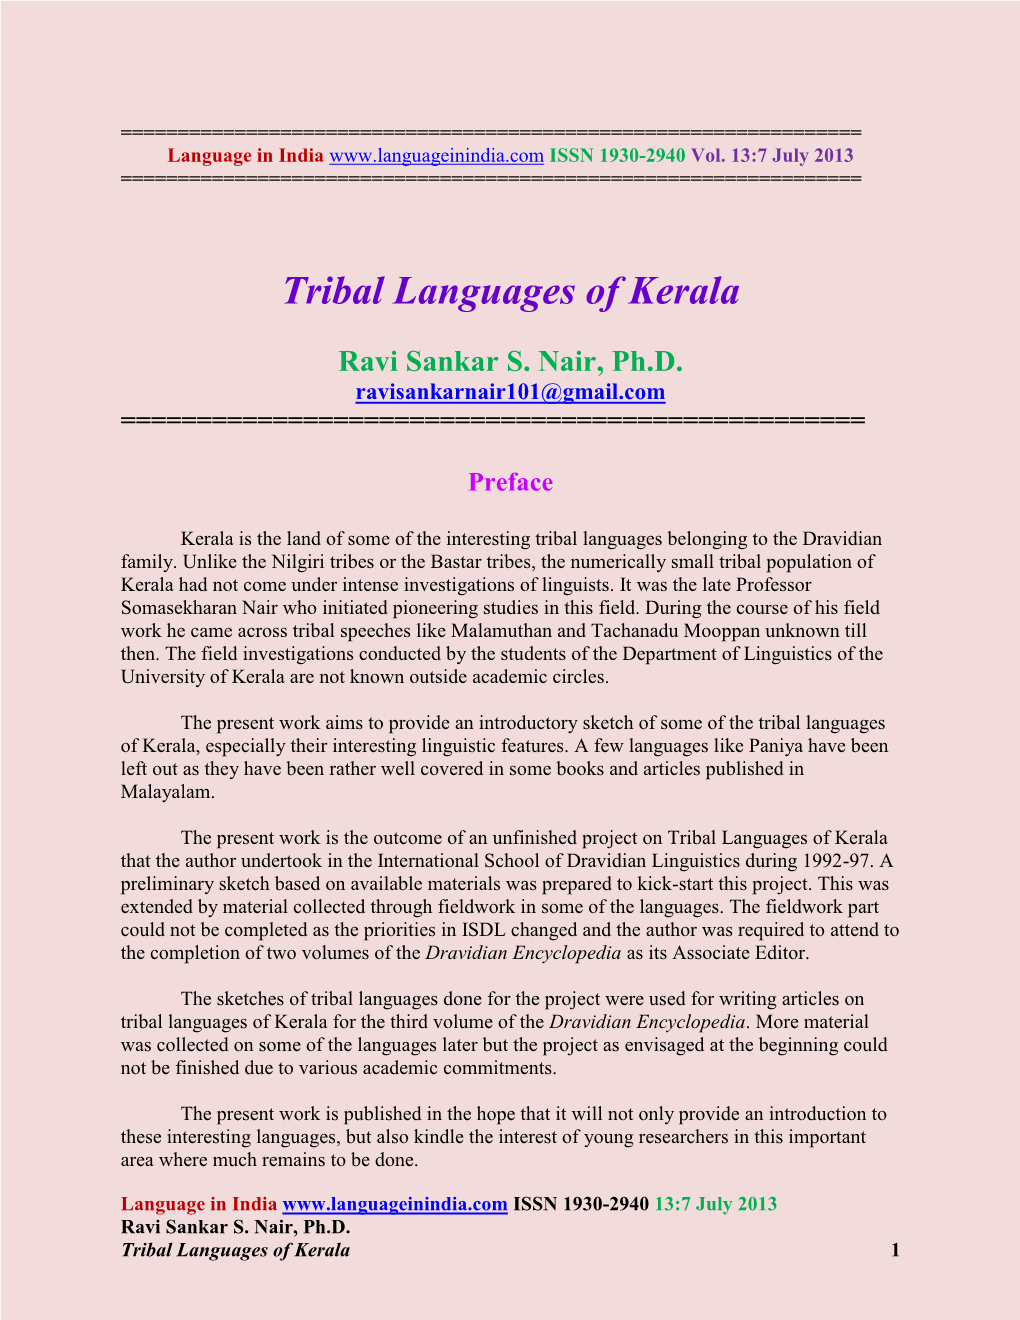 Tribal Languages of Kerala